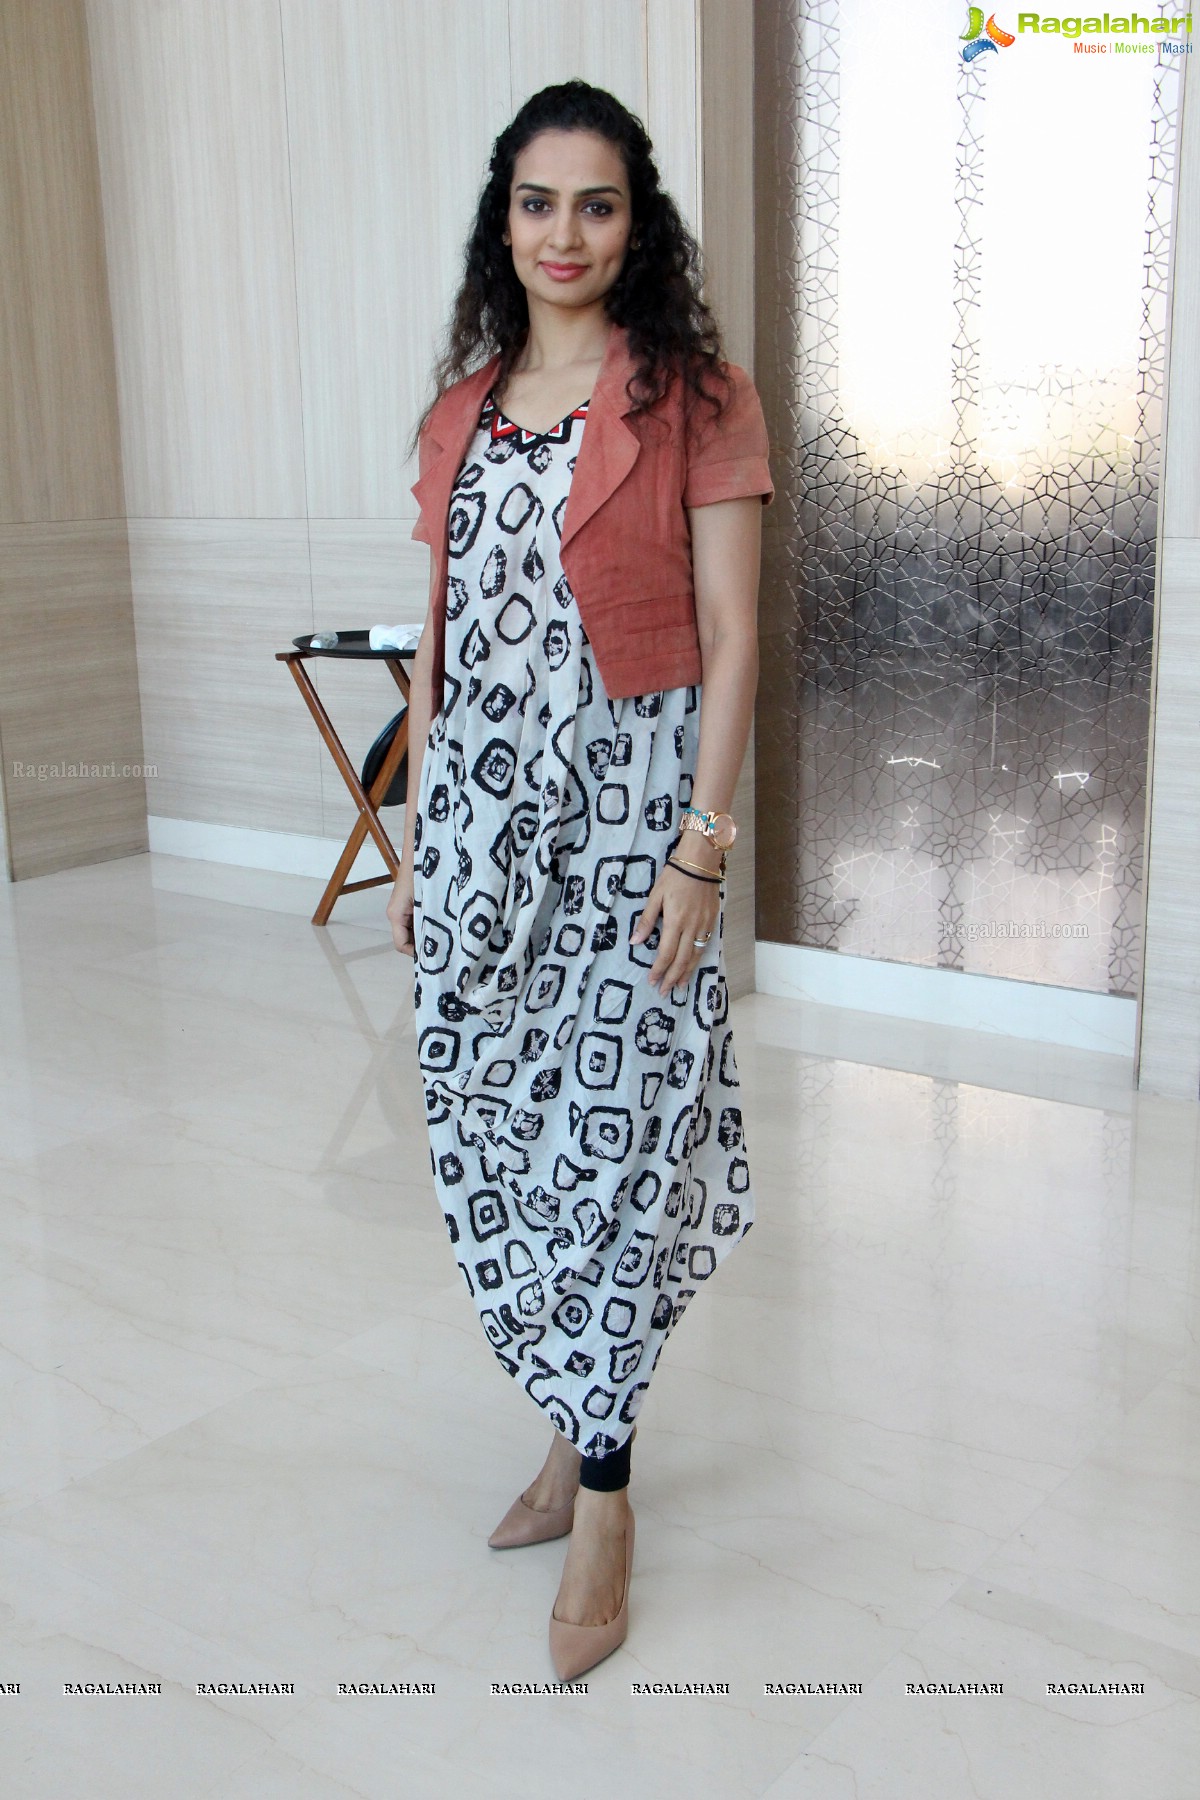 YFLO Interaction with Nidhi Swarup at Hotel Trident, Madhapur, Hyderabad